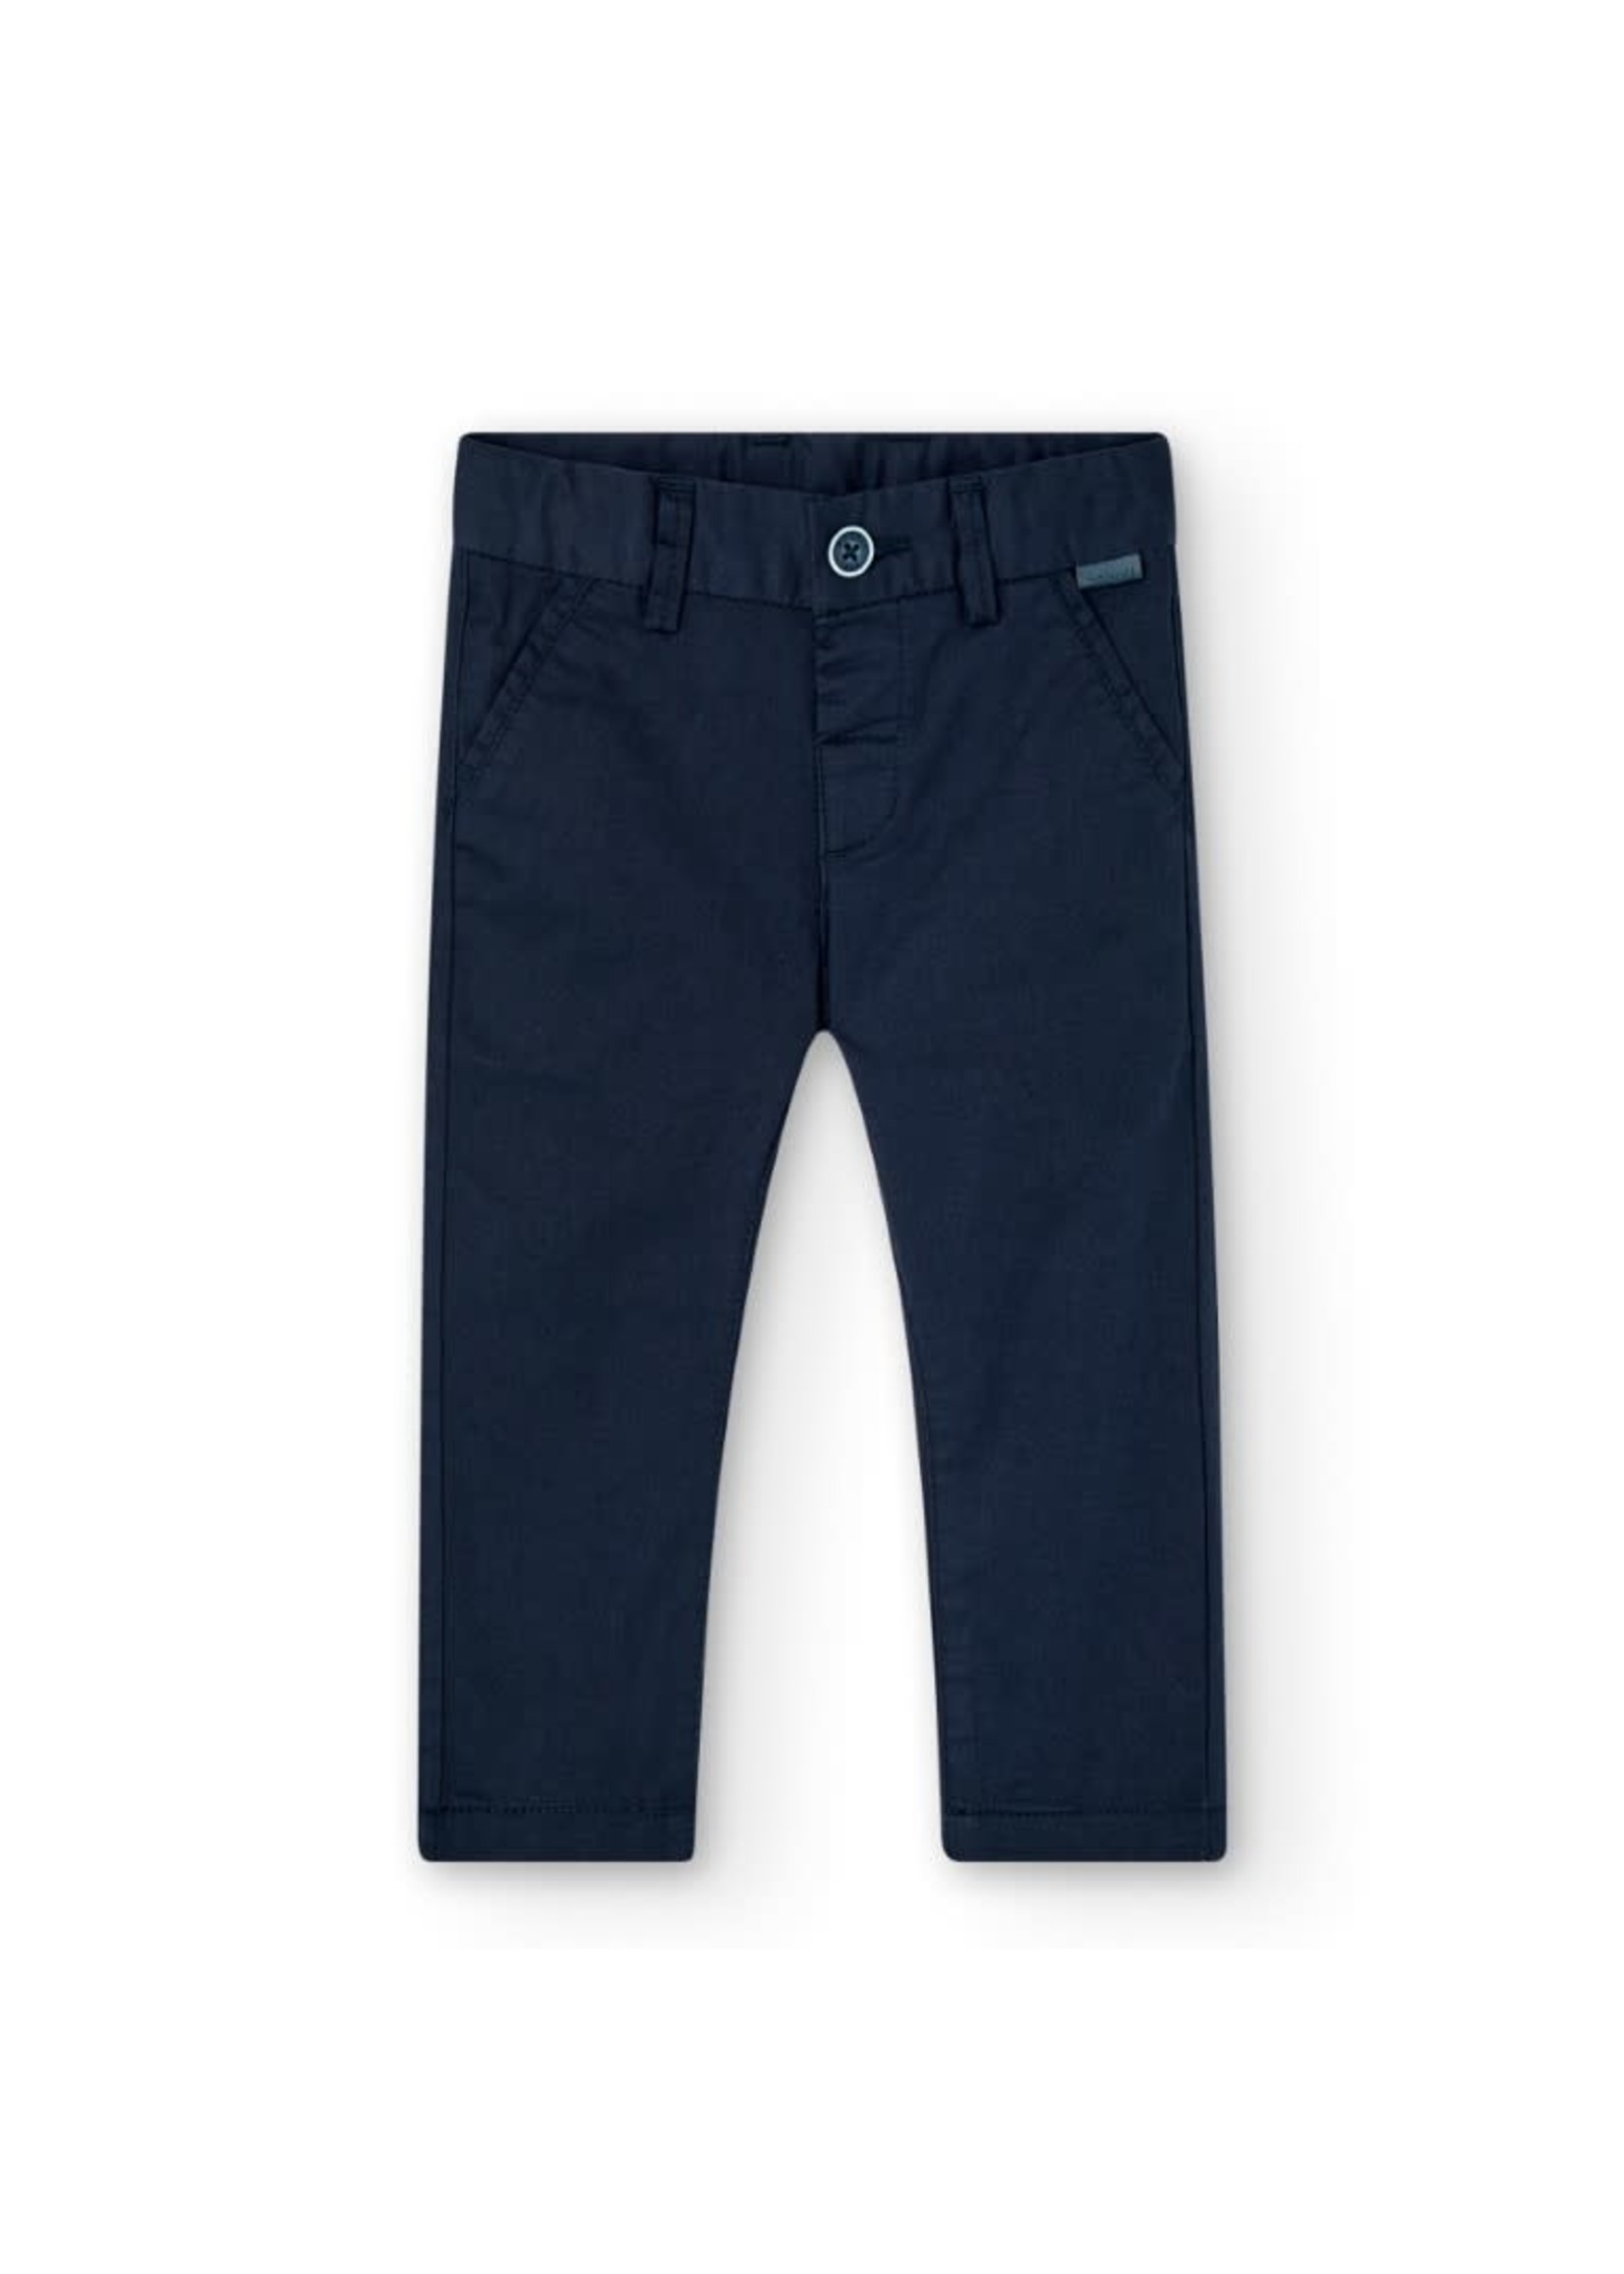 Boboli Boboli Stretch satin trousers for baby navy 716026